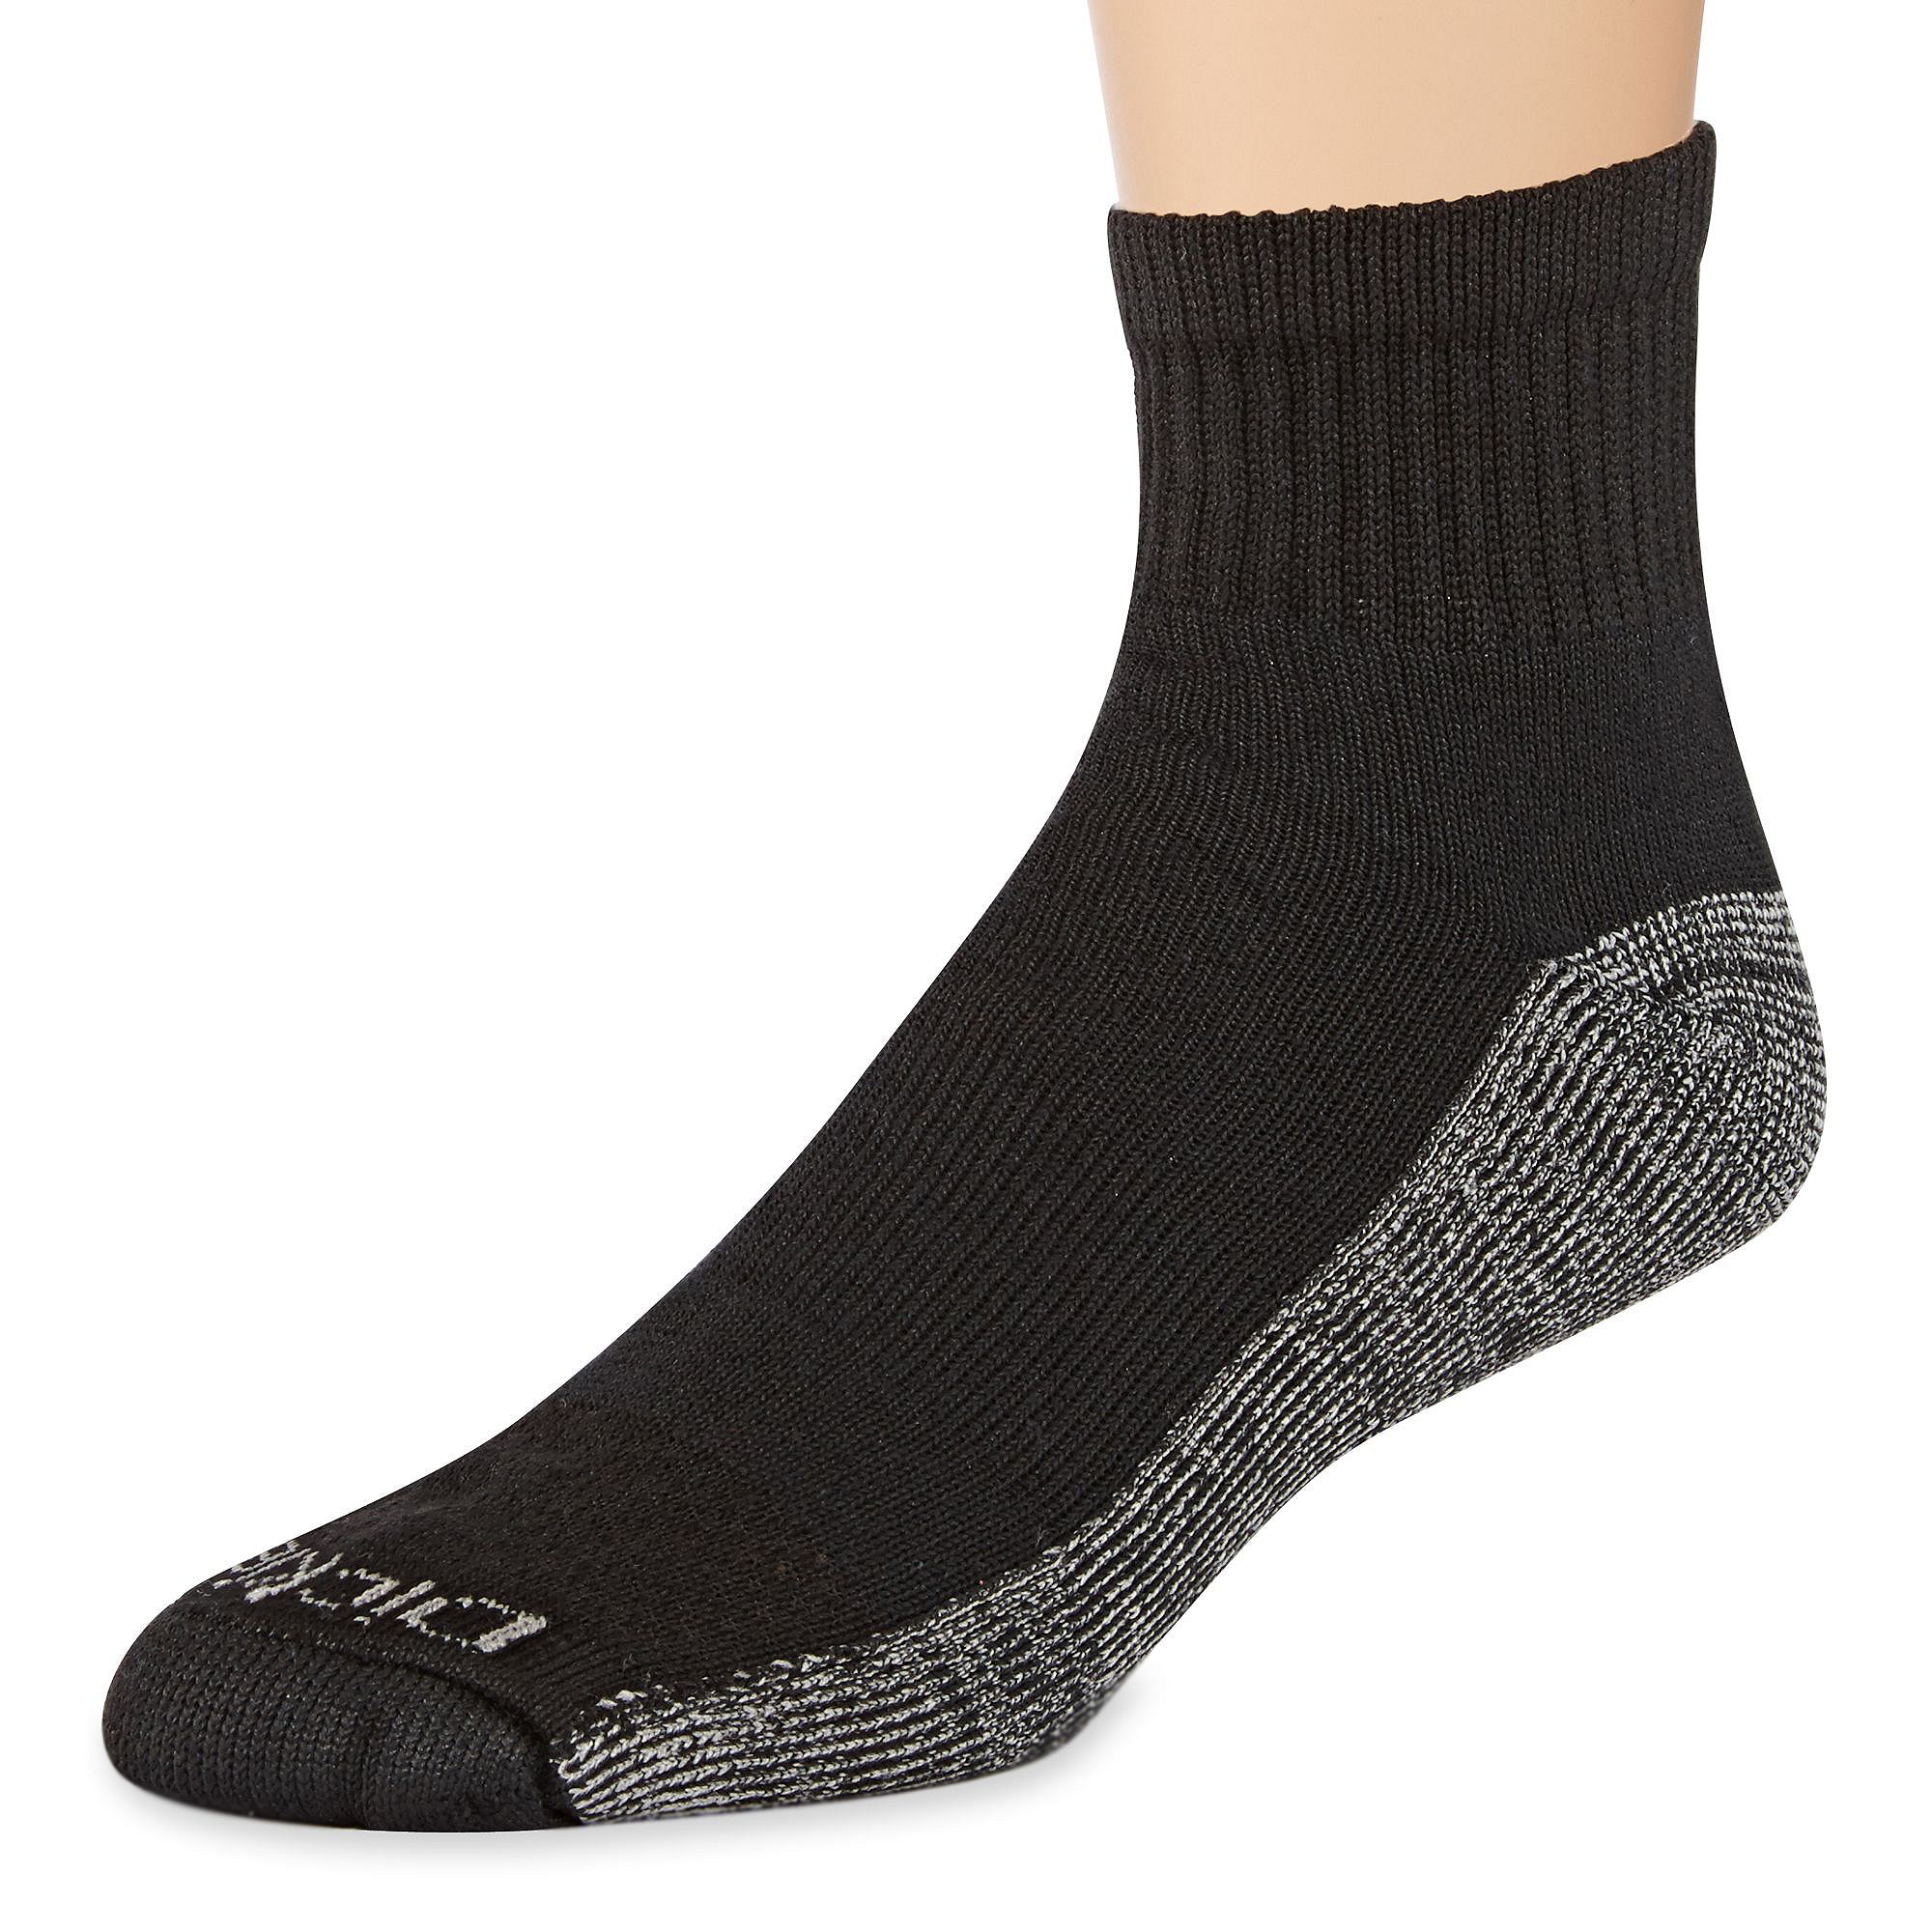 Dickies 6-pk. Dri-Tech Comfort Quarter Socks